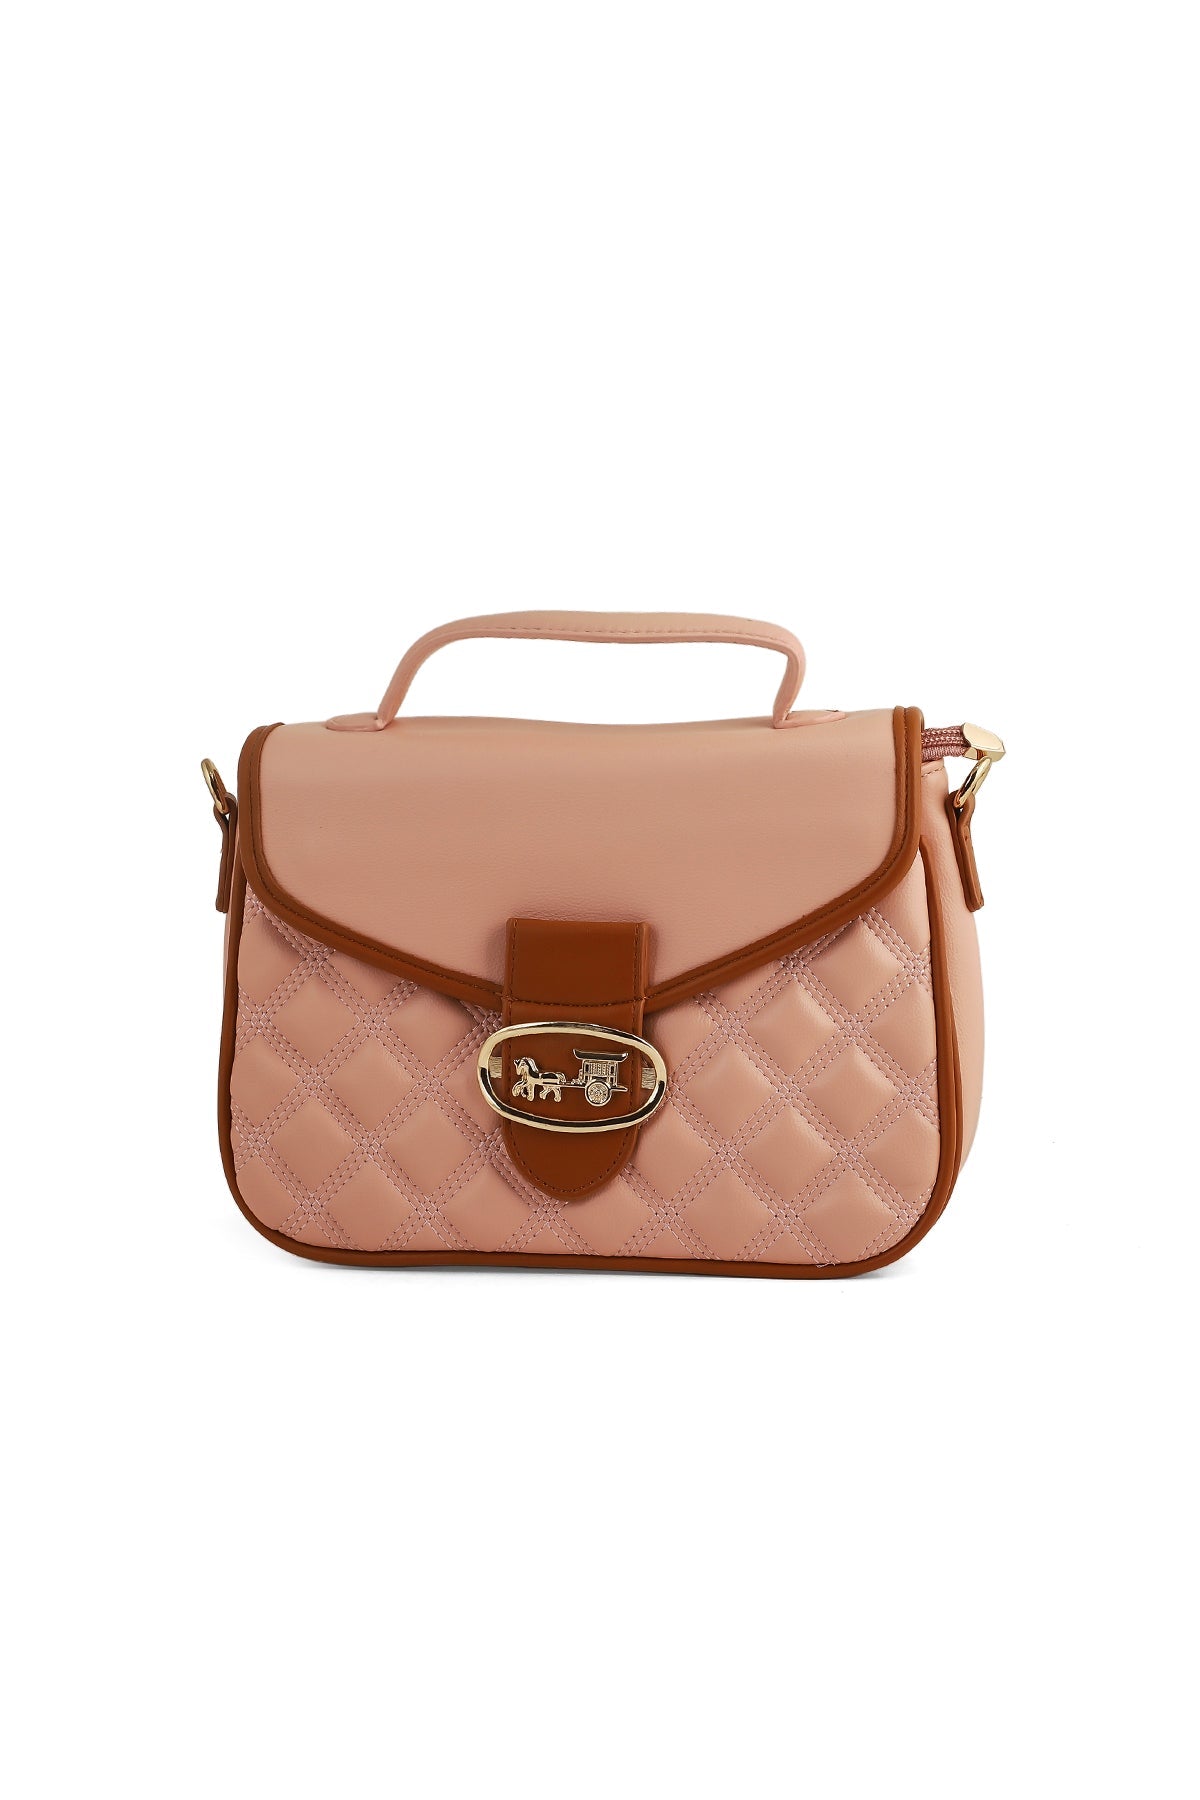 Top Handle Hand Bags B14920-Pink